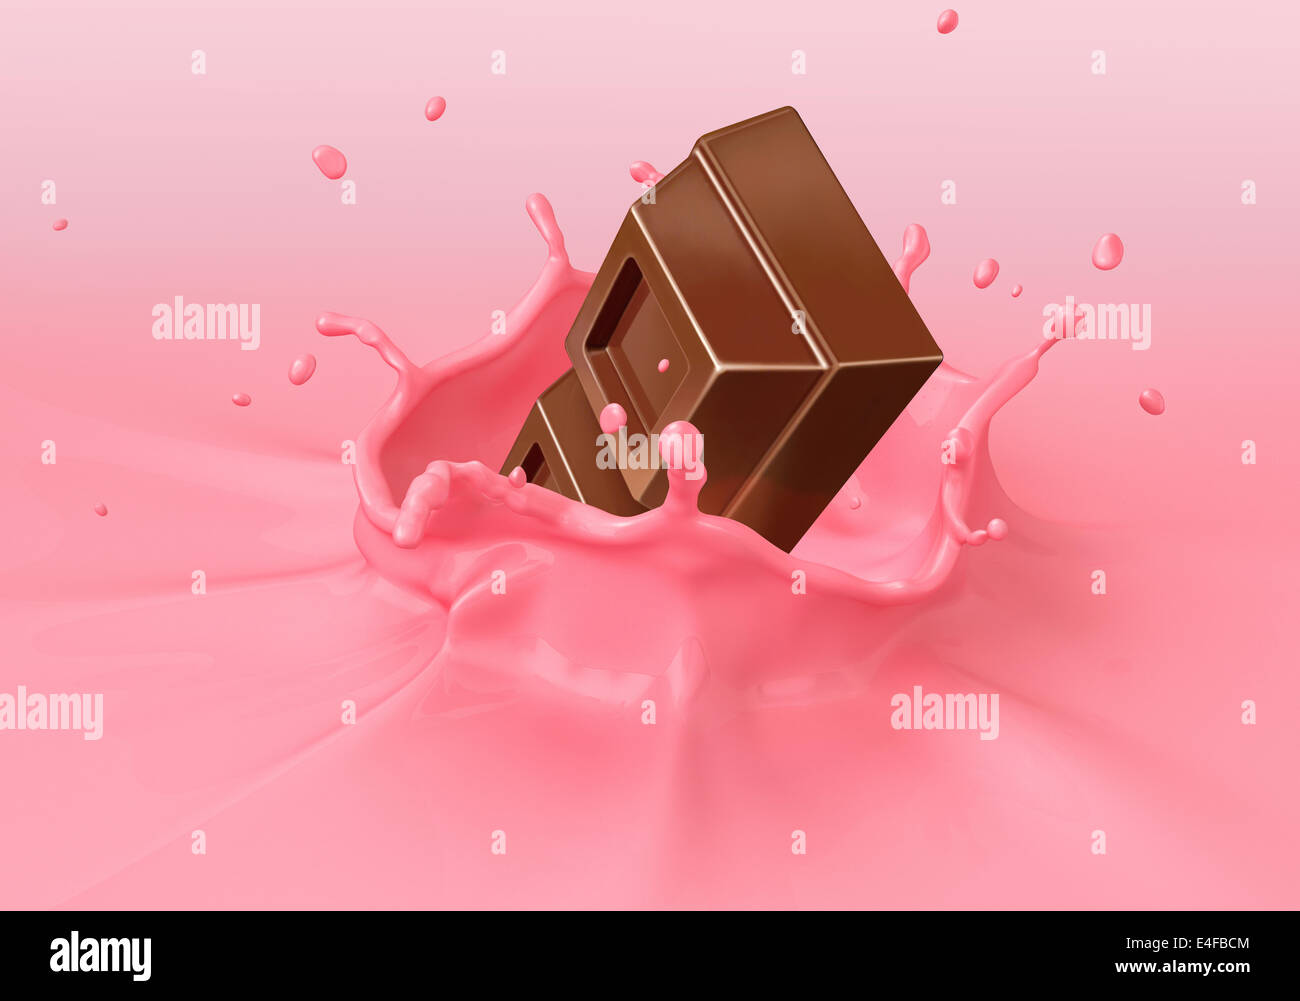 Chocolate blocks splashing into a pink milkshake. Close-up bird eye view. Stock Photo